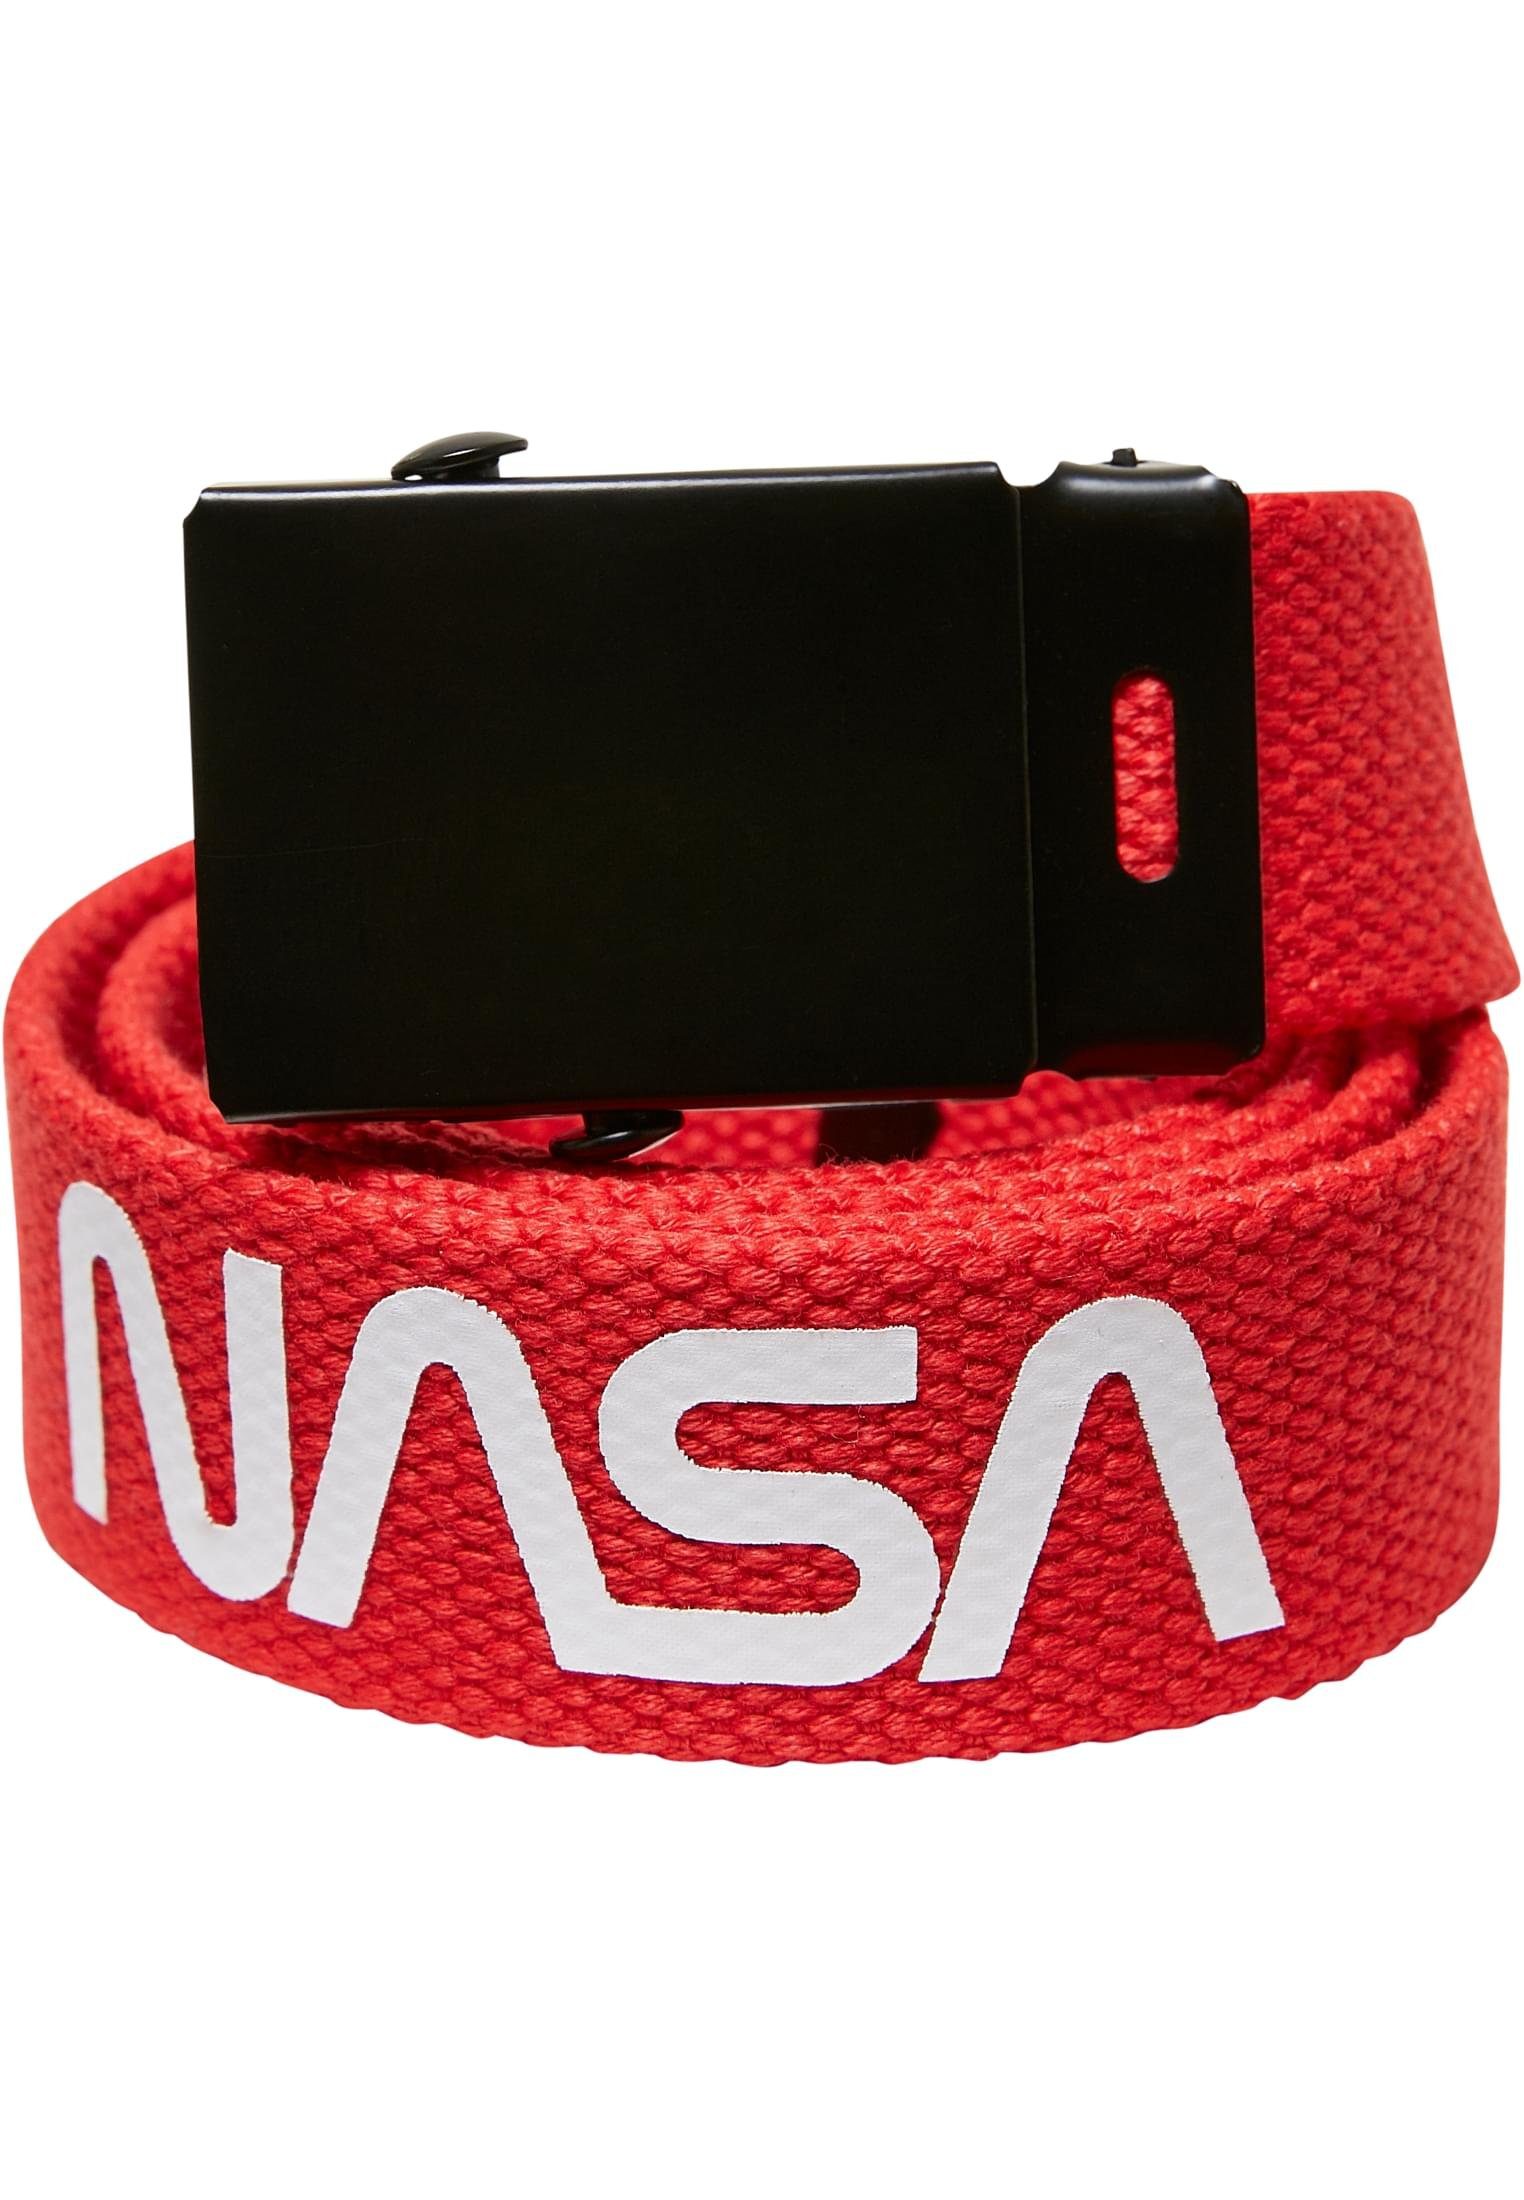 black-red Tee NASA 2-Pack Kids Belt Hüftgürtel Mister Accessoires MisterTee